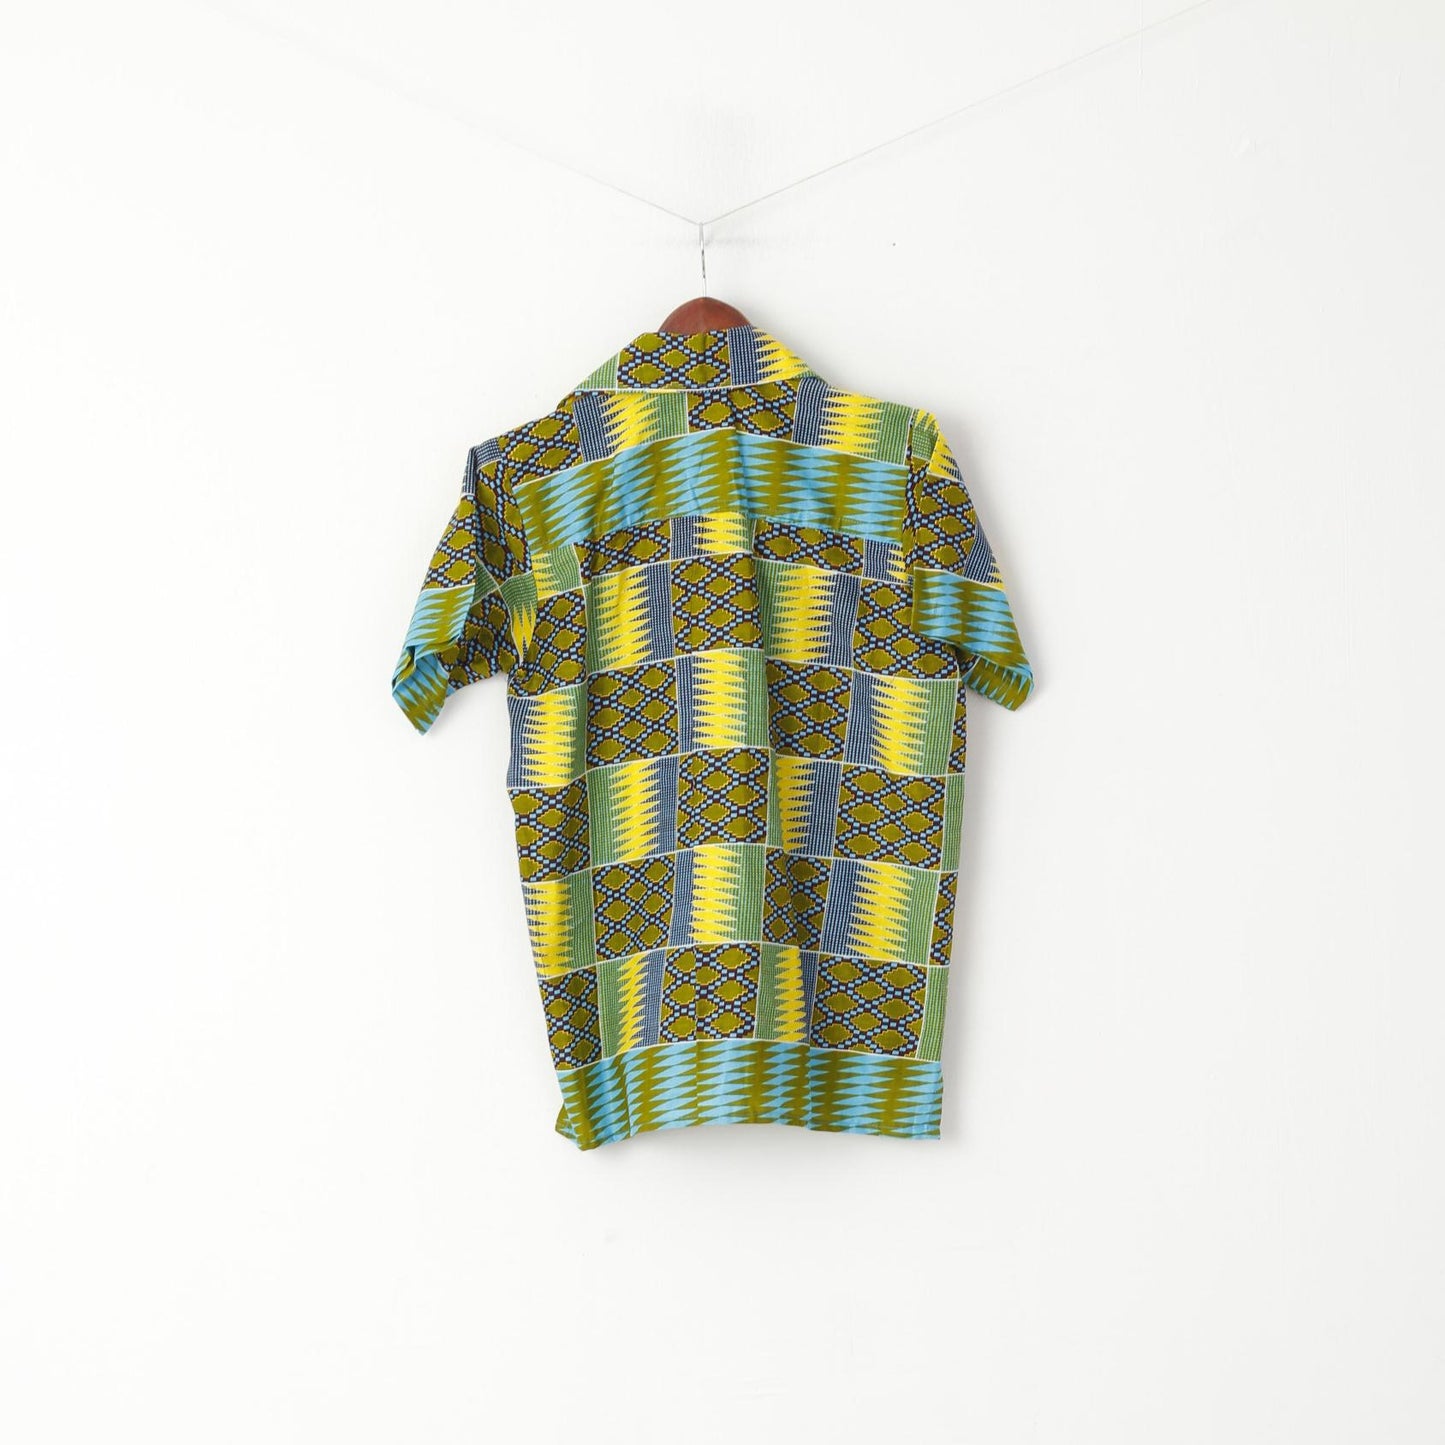 Saitino Boys 14 Age Casual Shirt Multicoloured Handmade Short Sleeve Summer Top